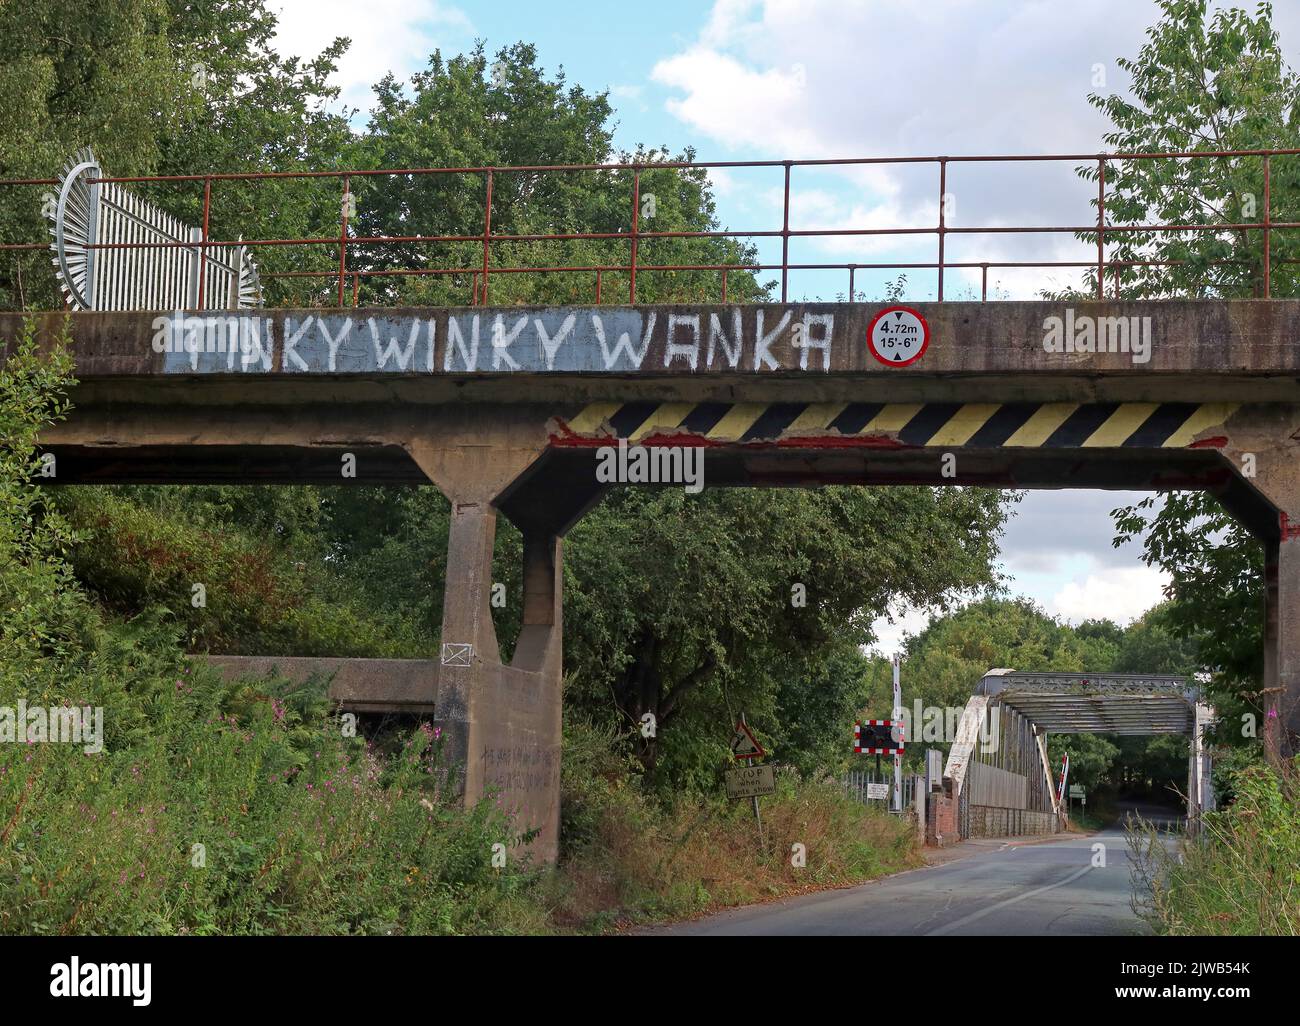 Port Warrington entrance, graffiti on bridge, Tinky Winky Wanka, Moore Ln, Warrington, Cheshire, England, UK, WA4 6T - Ocean Gateway Stock Photo